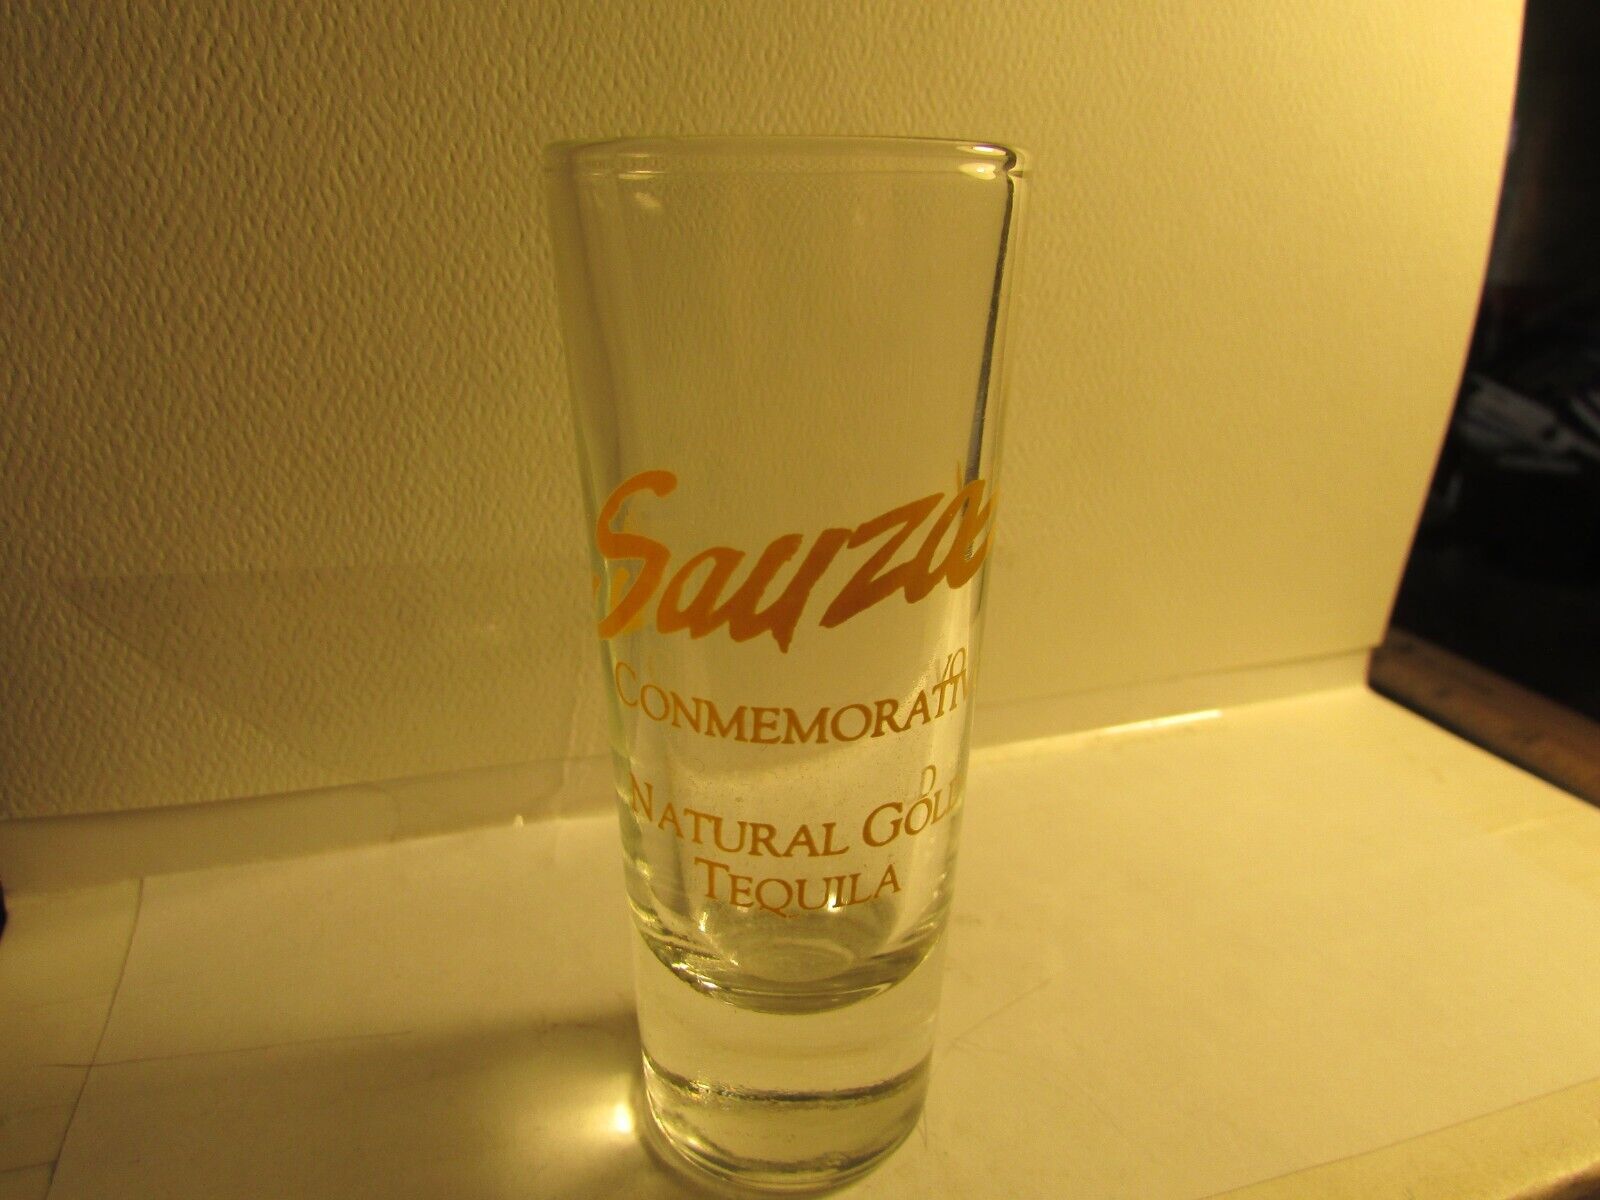 Sauza Commemorativo - Natural Gold Tequila -Tequila Style Shot Glass-yellow logo